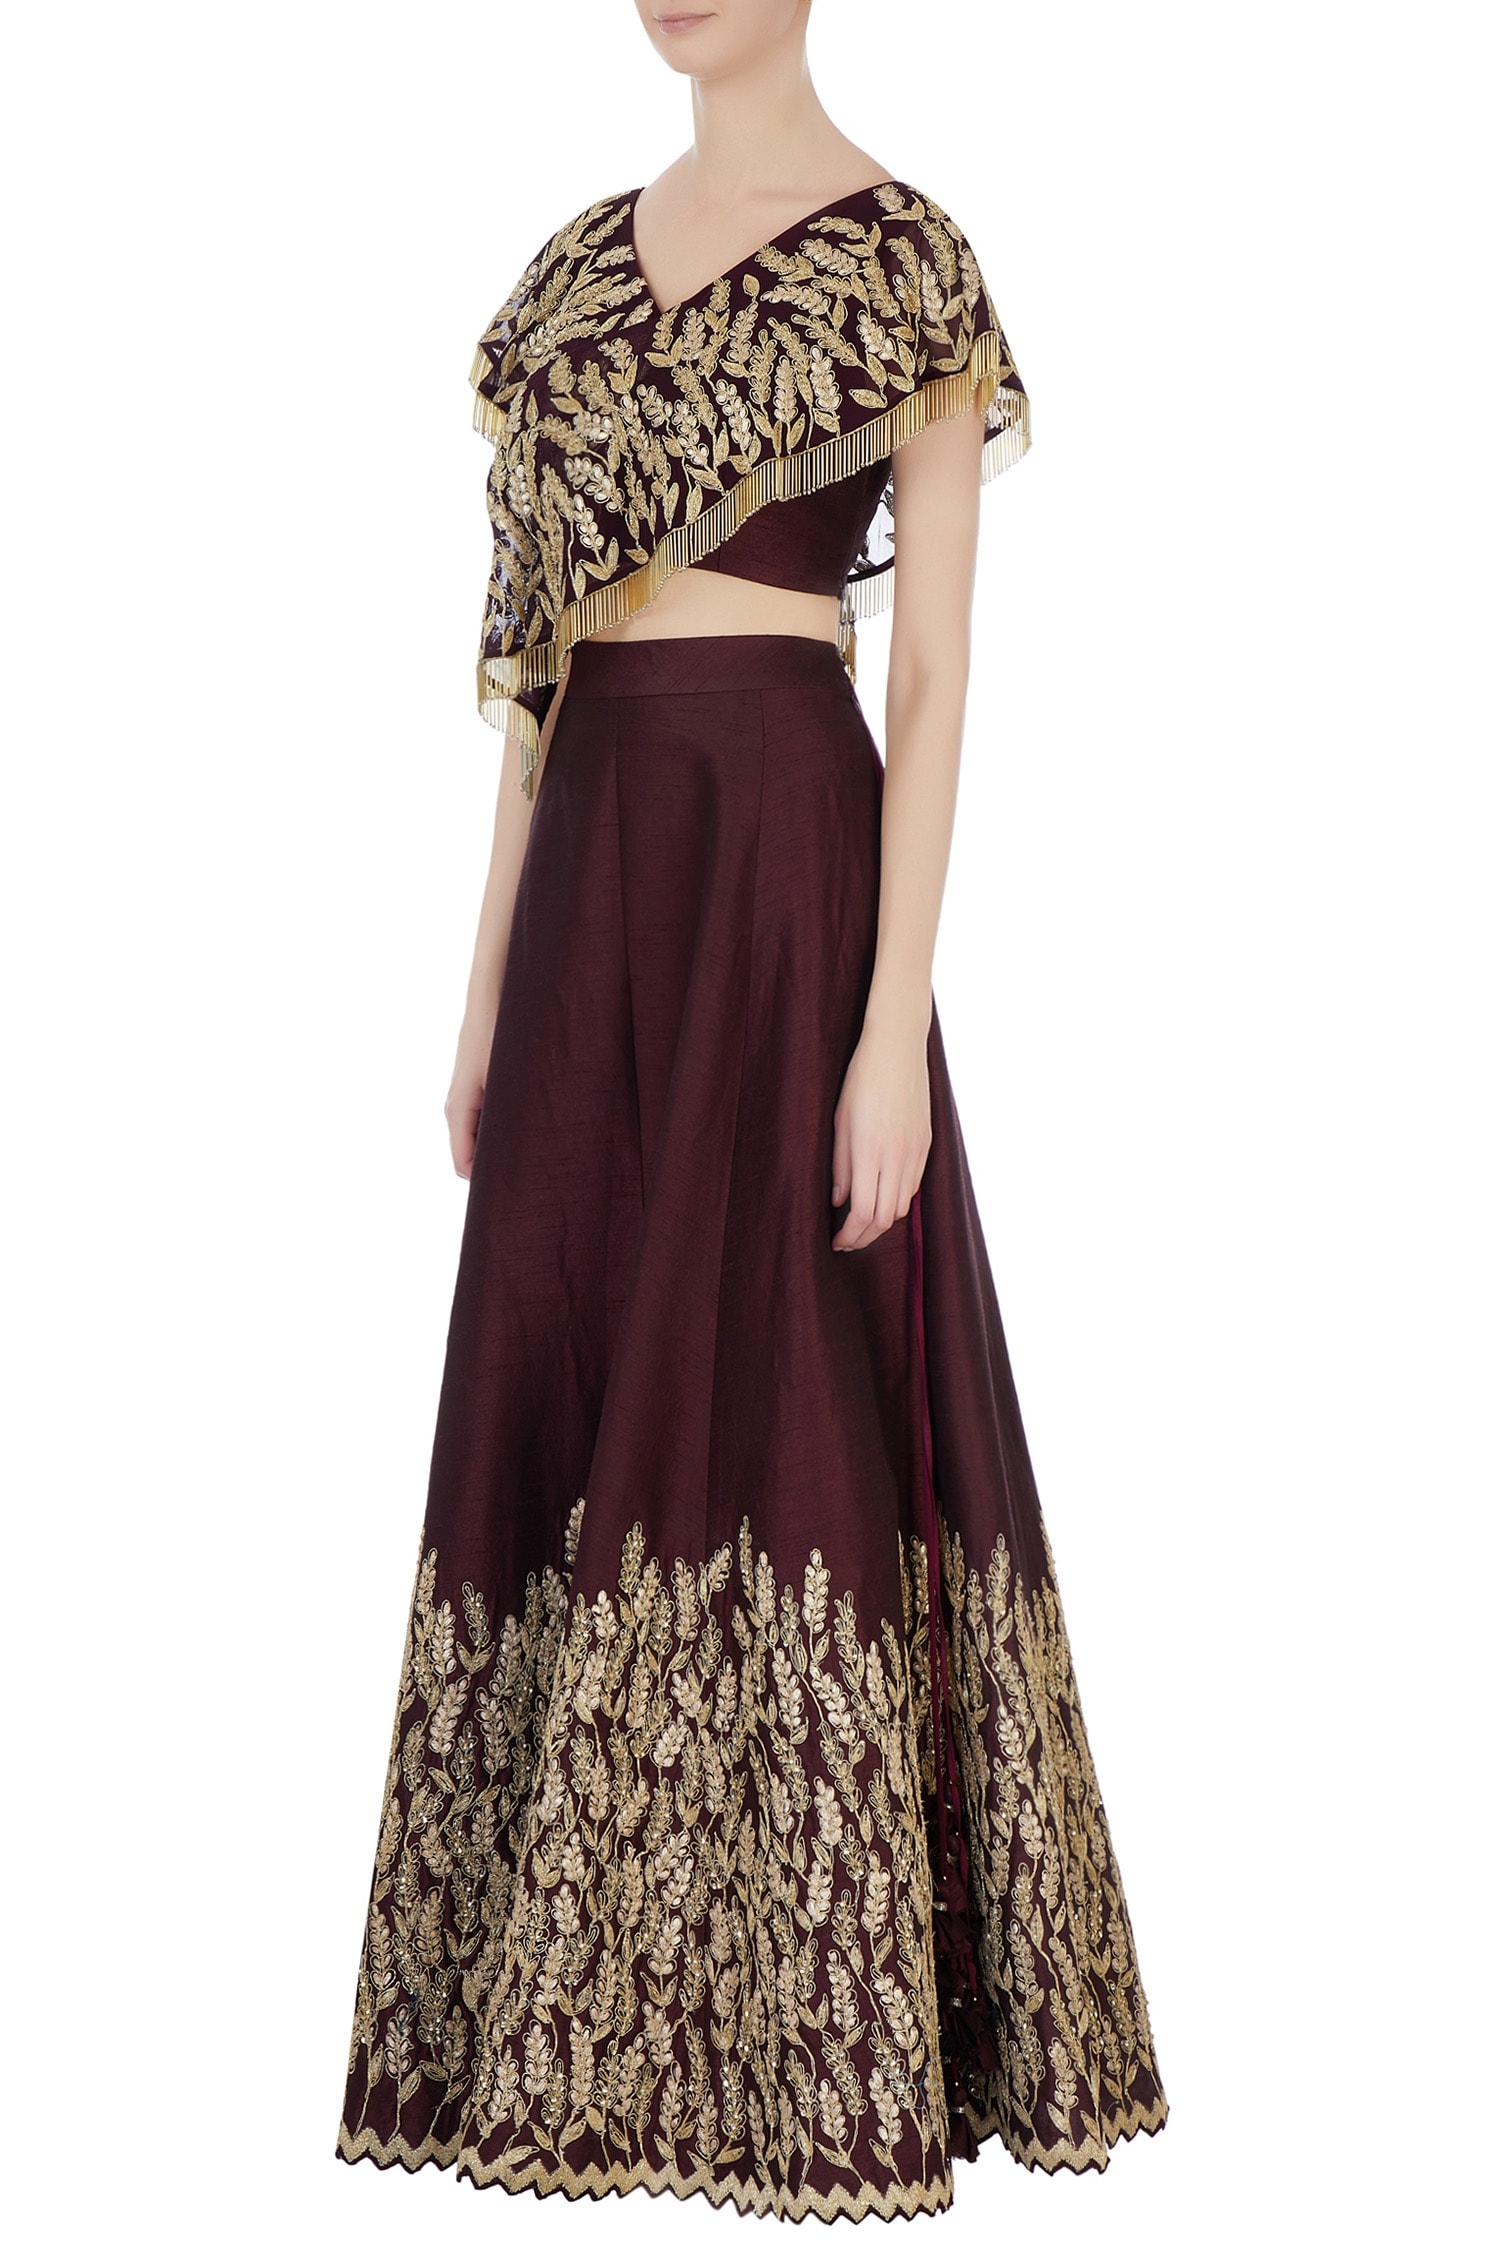 Buy Shruti Ranka Brown Raw Silk Embroidered Lehenga With Blouse Online ...